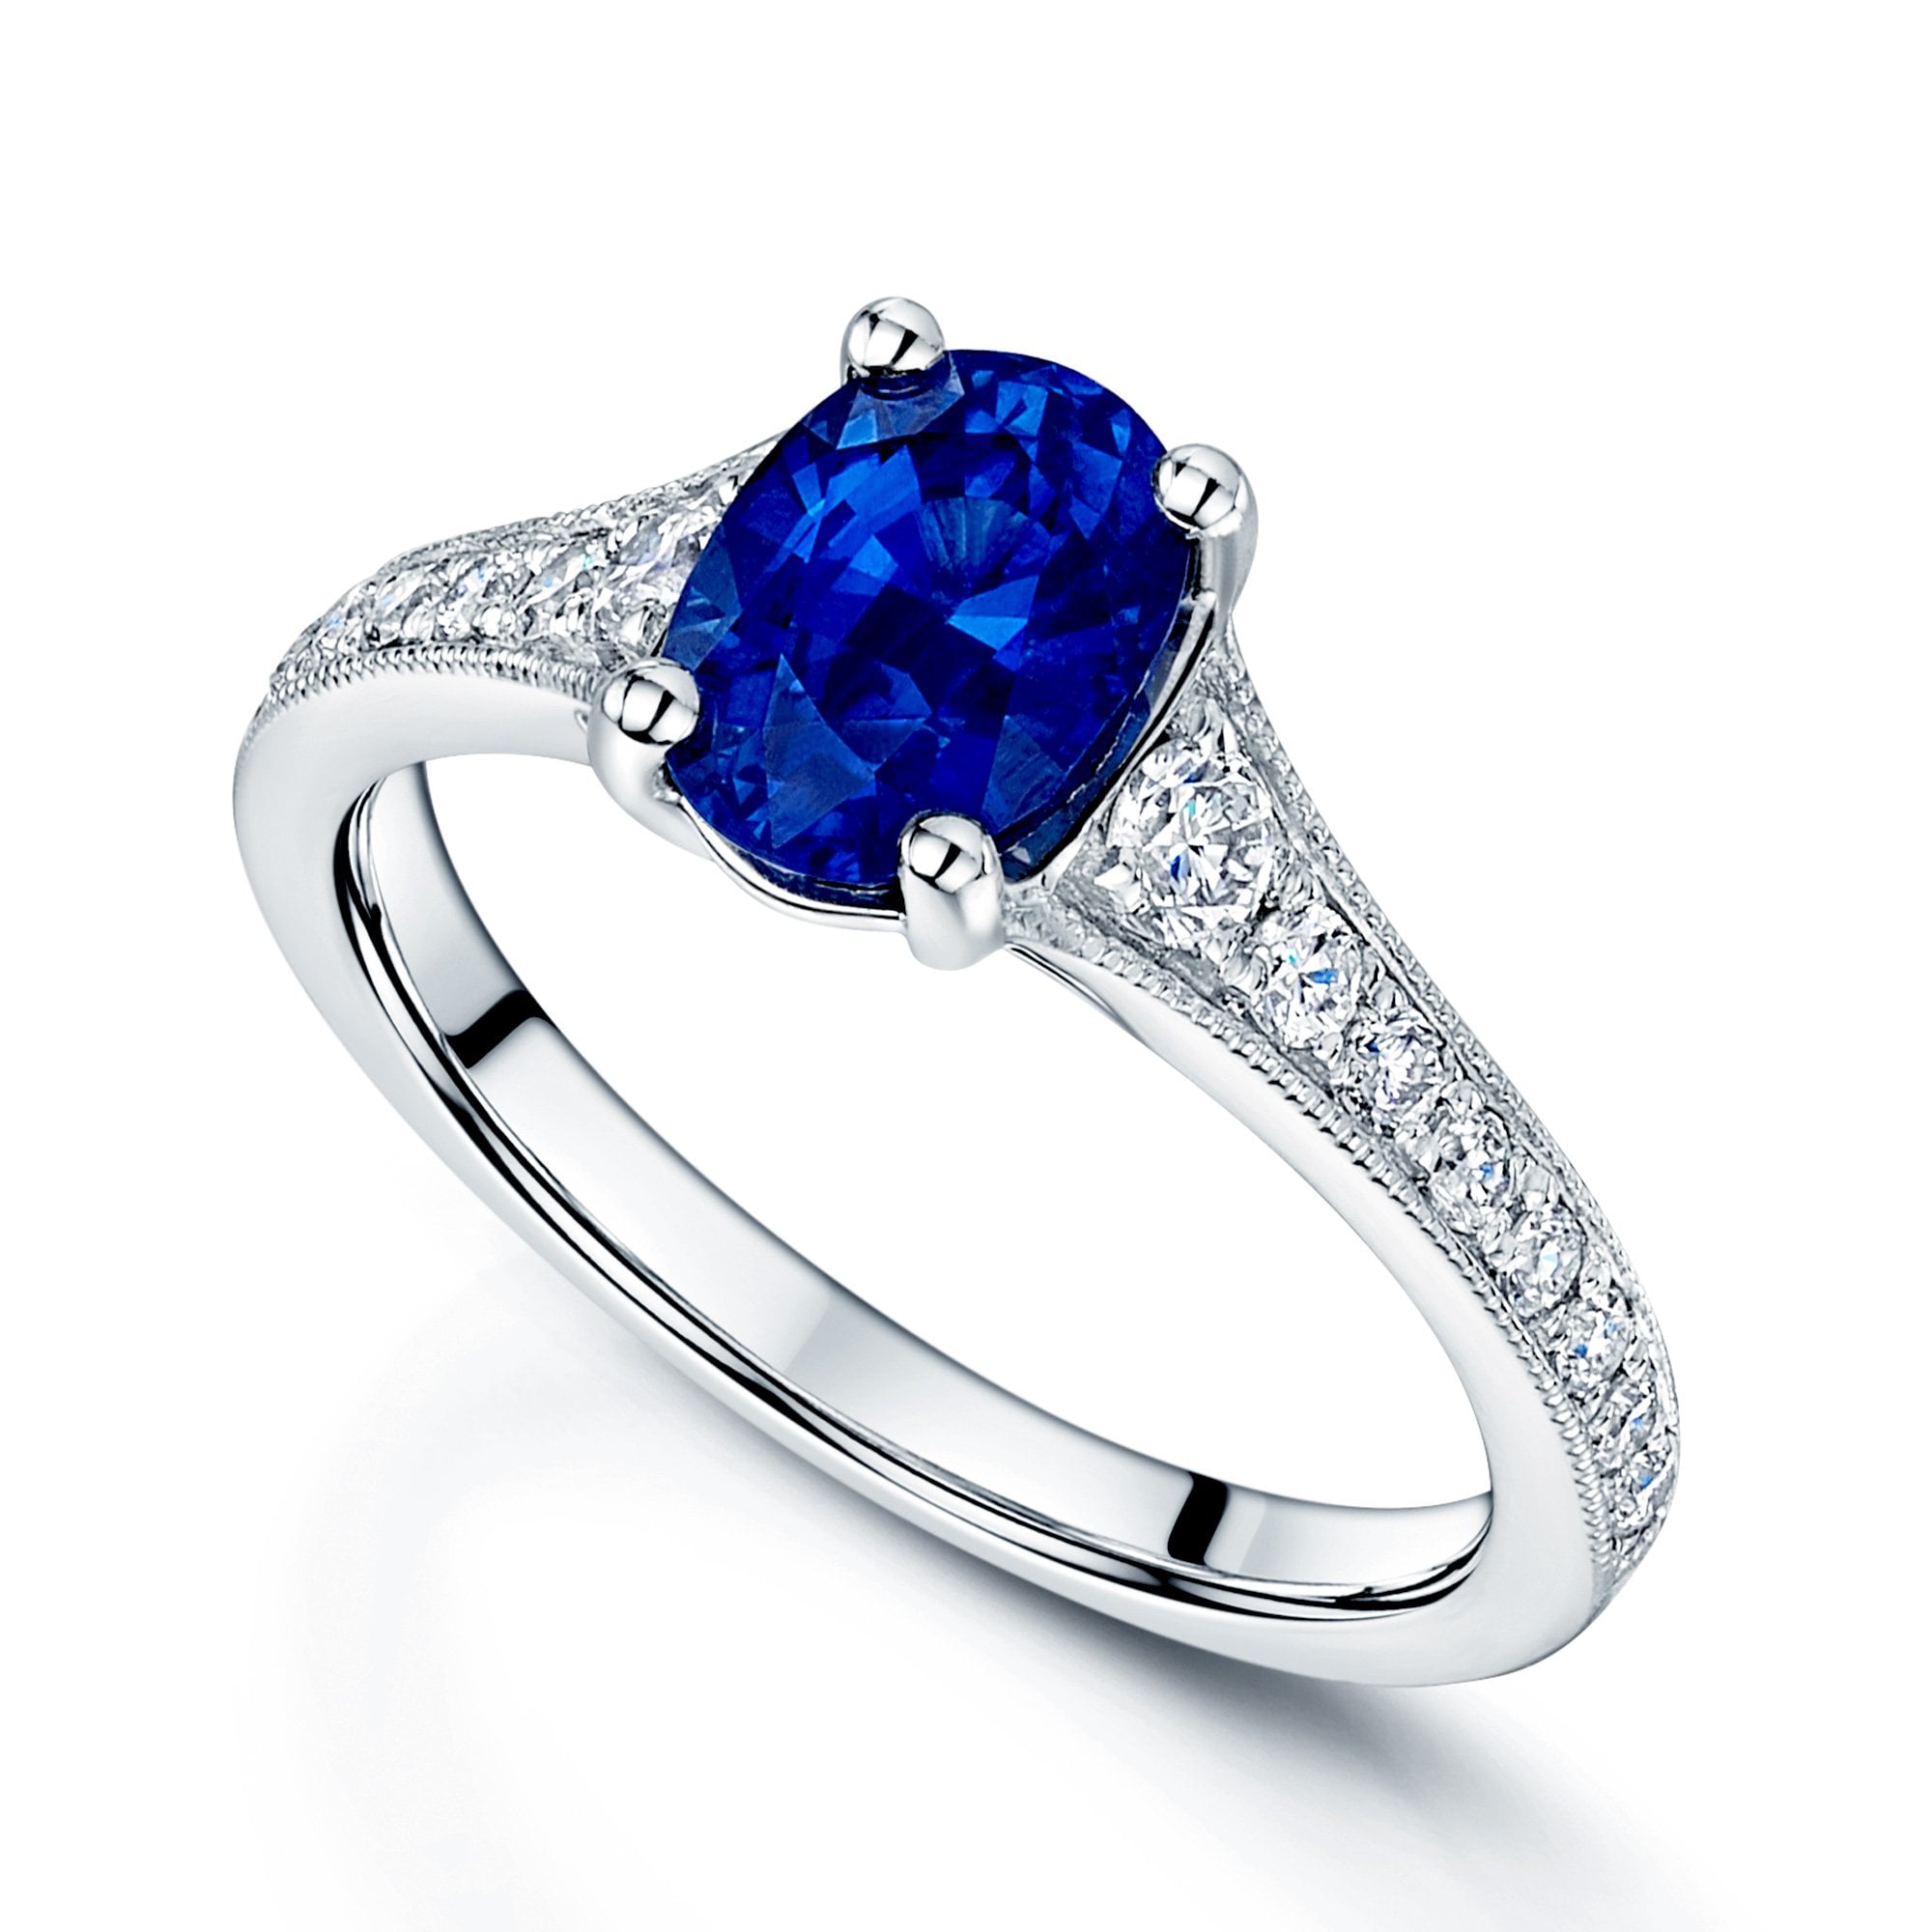 Platinum Oval Claw Set Sapphire Ring With Bead Edge Grain Set Diamond Shoulders